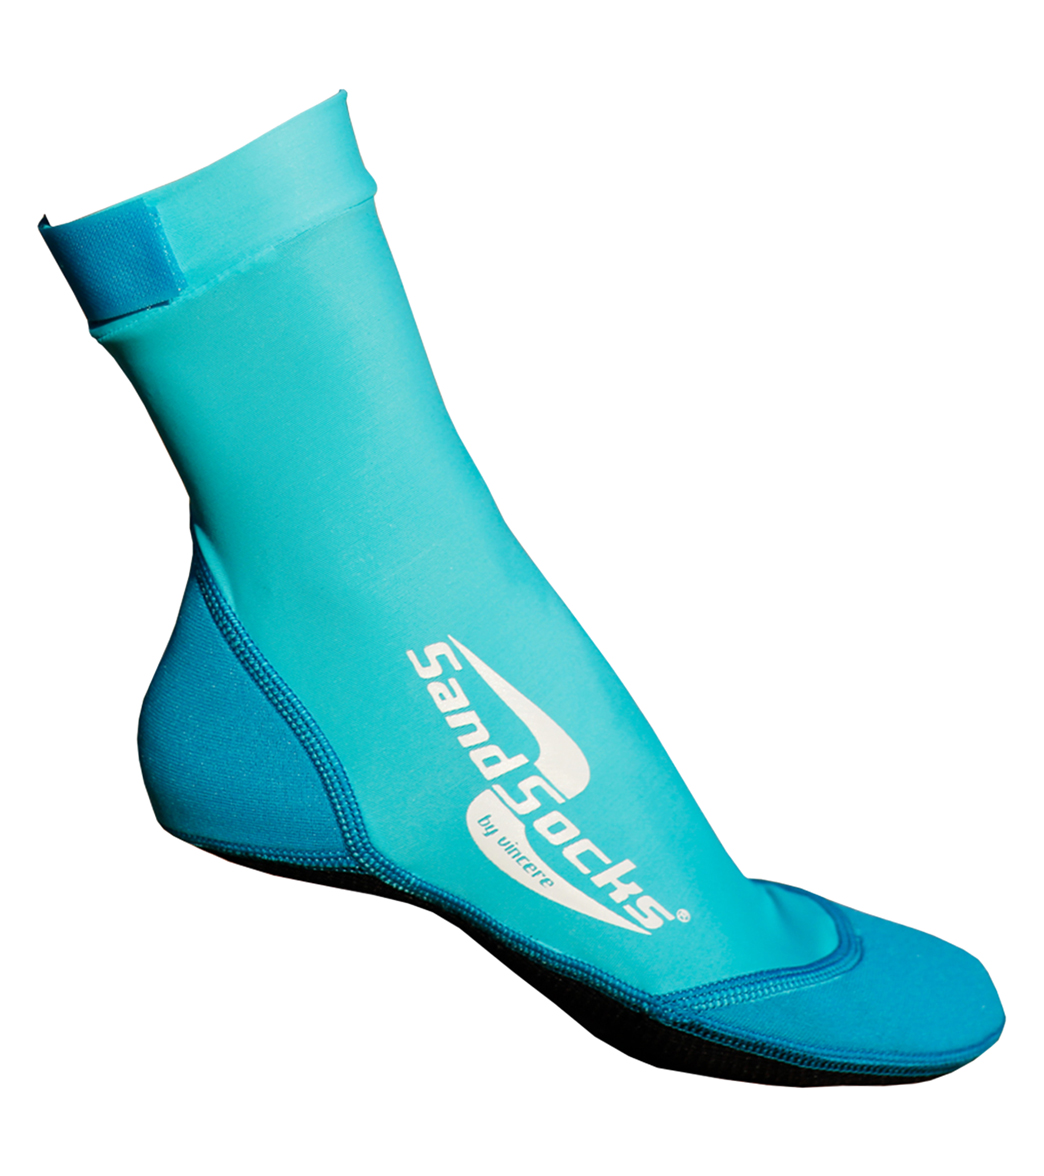 Sand Socks Sandwater Shoes - Marine Blue Large Men's 10.5-12; Women's 12-14 - Swimoutlet.com